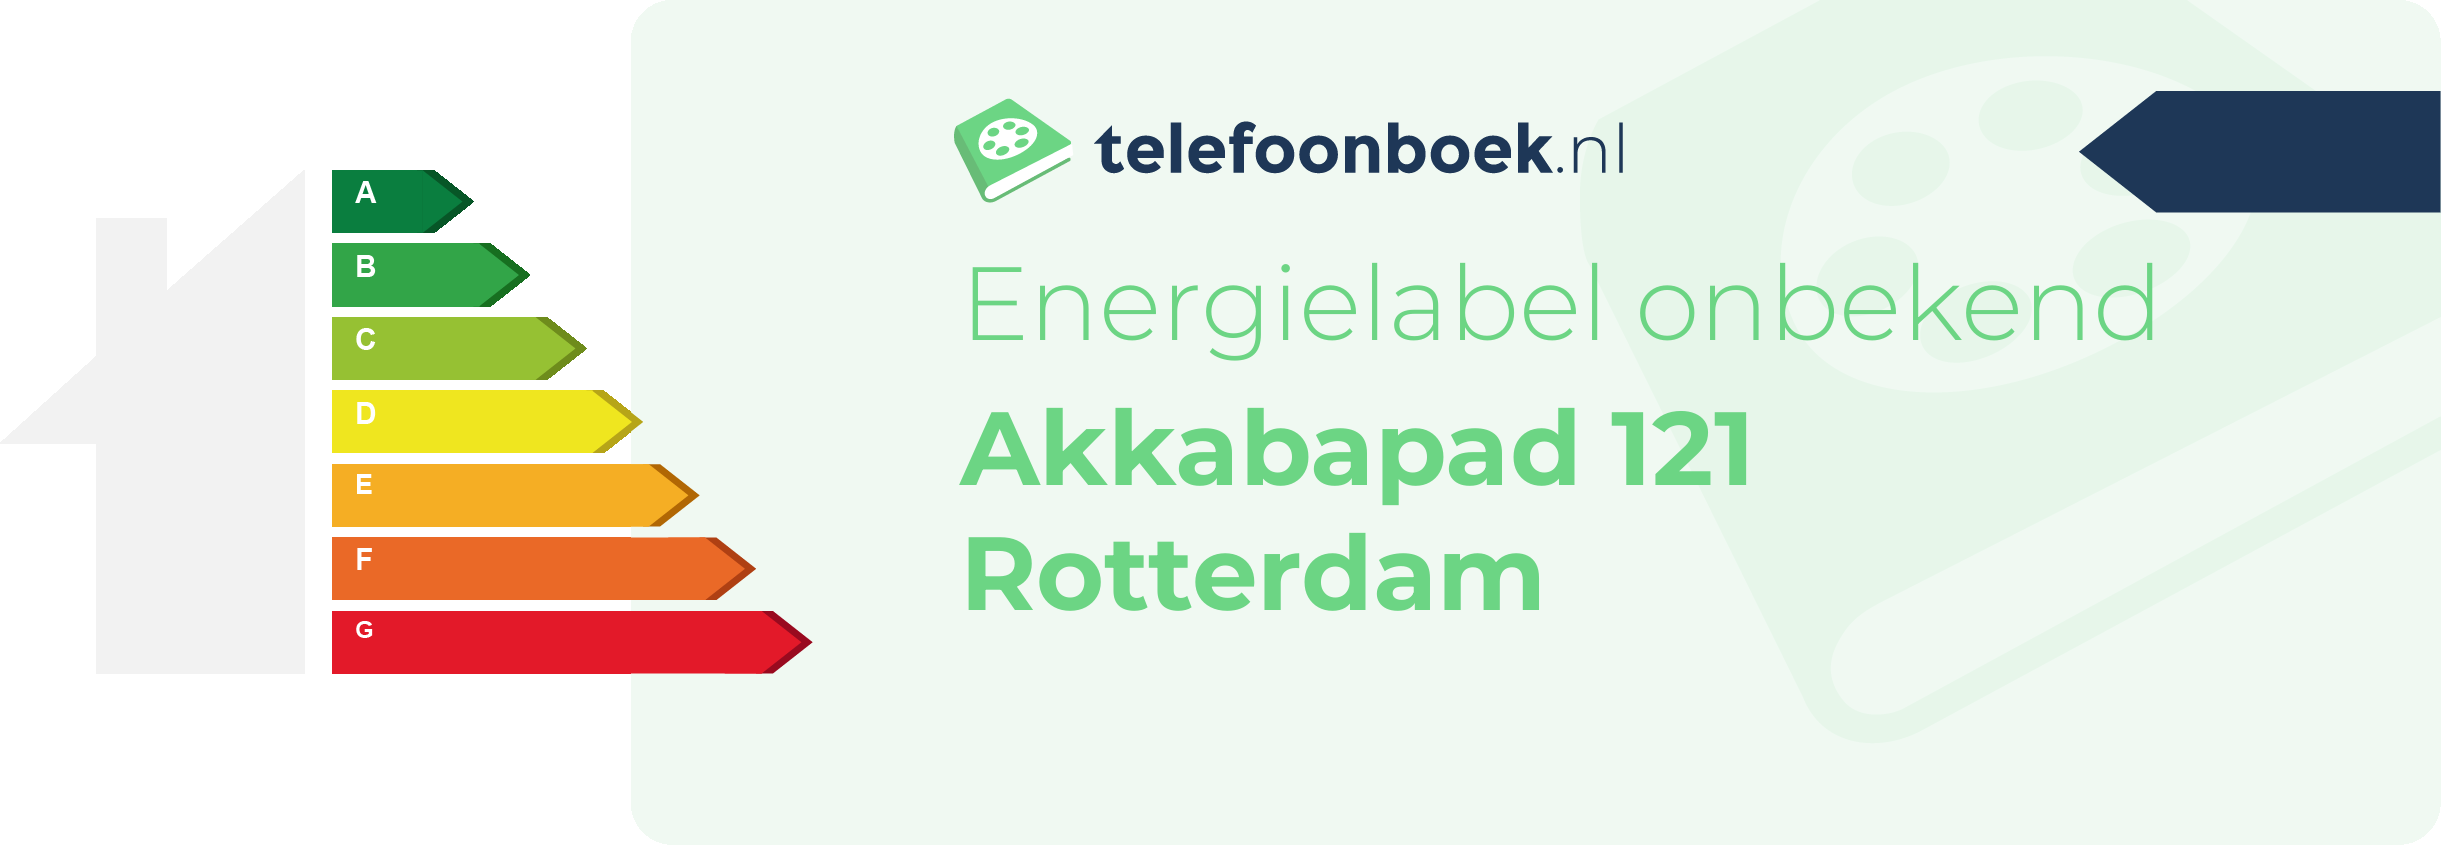 Energielabel Akkabapad 121 Rotterdam